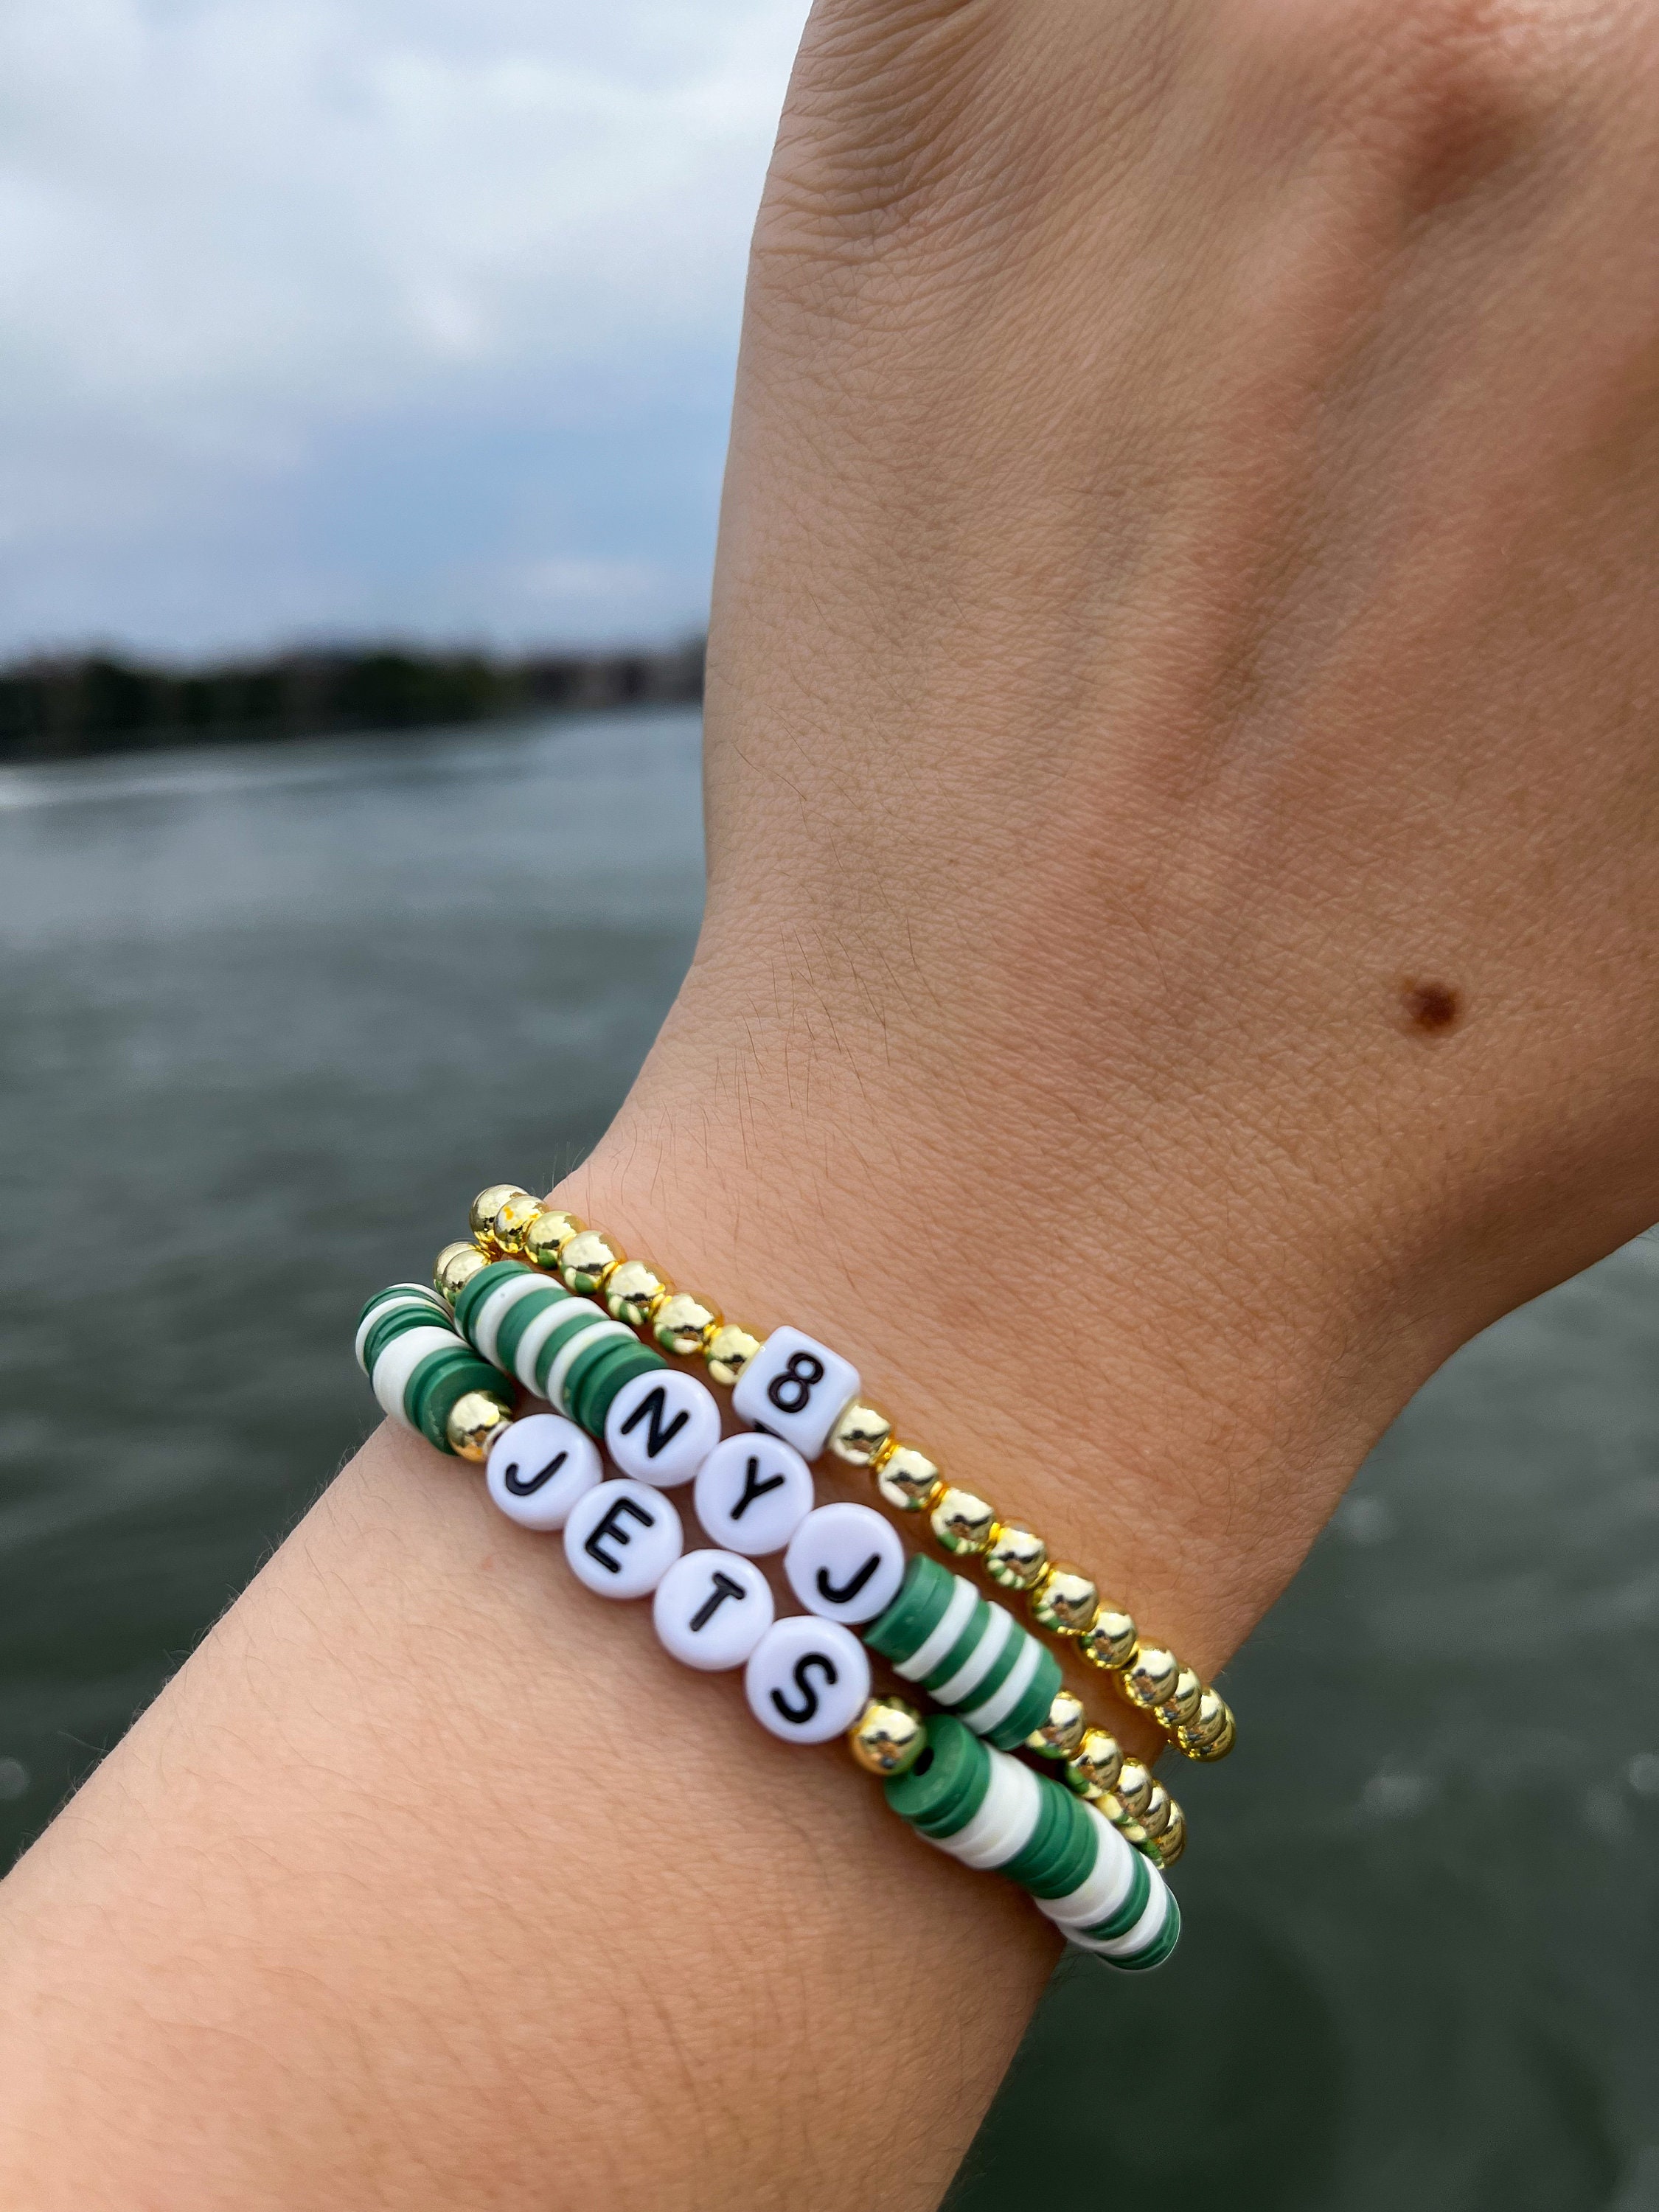 Jet Beads | Island Malju Black Bead Bracelet, Chains and Anklets 5 1/2